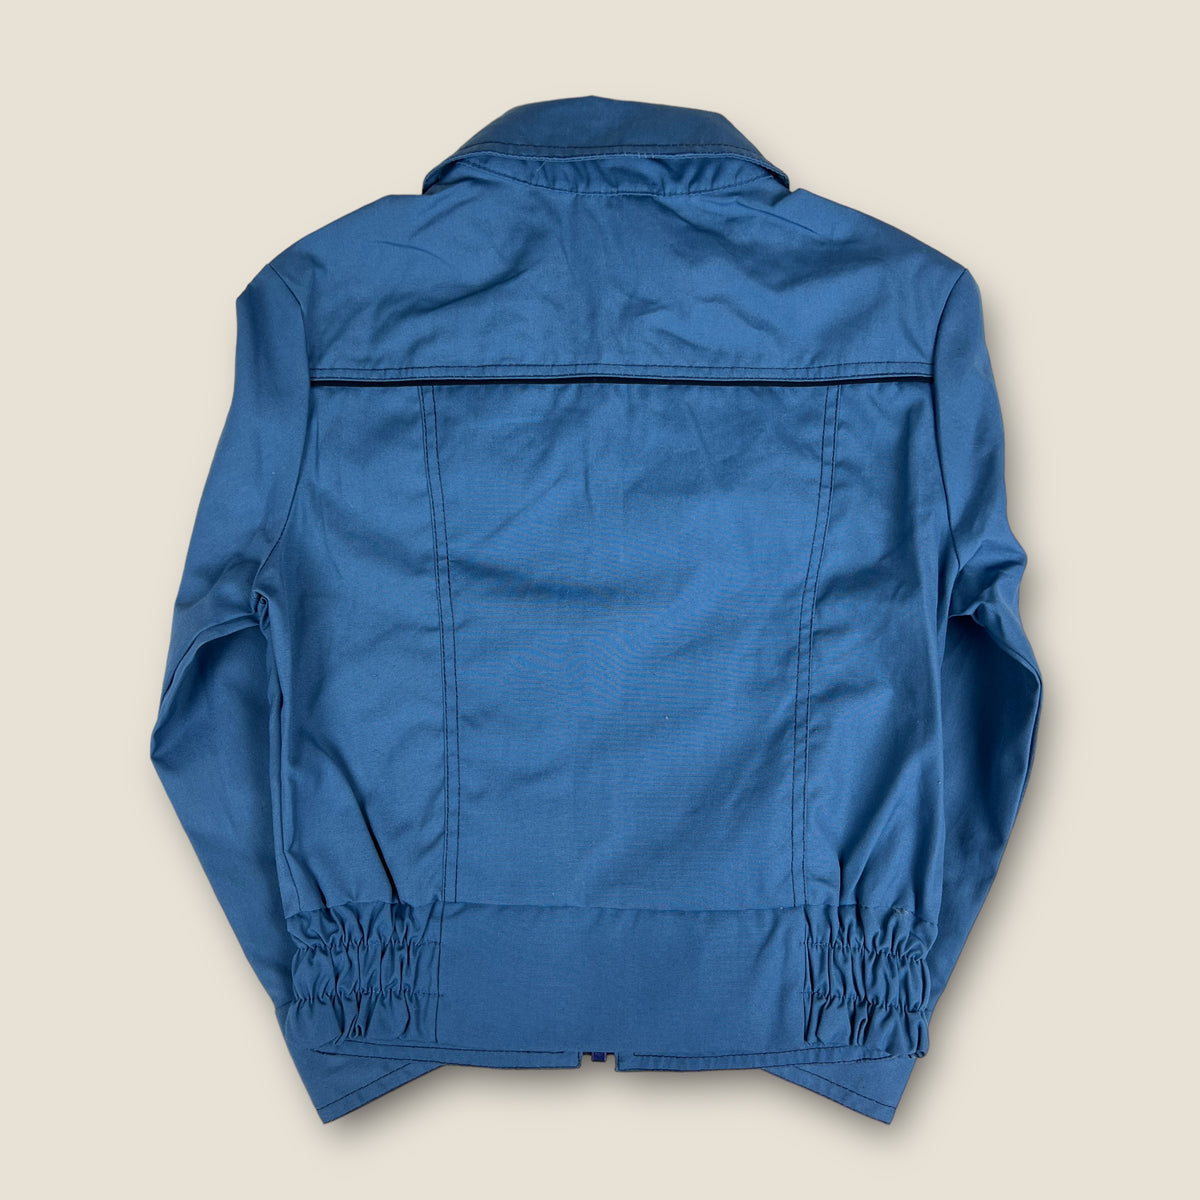 Retro Jacket Brand New size 7-8 years